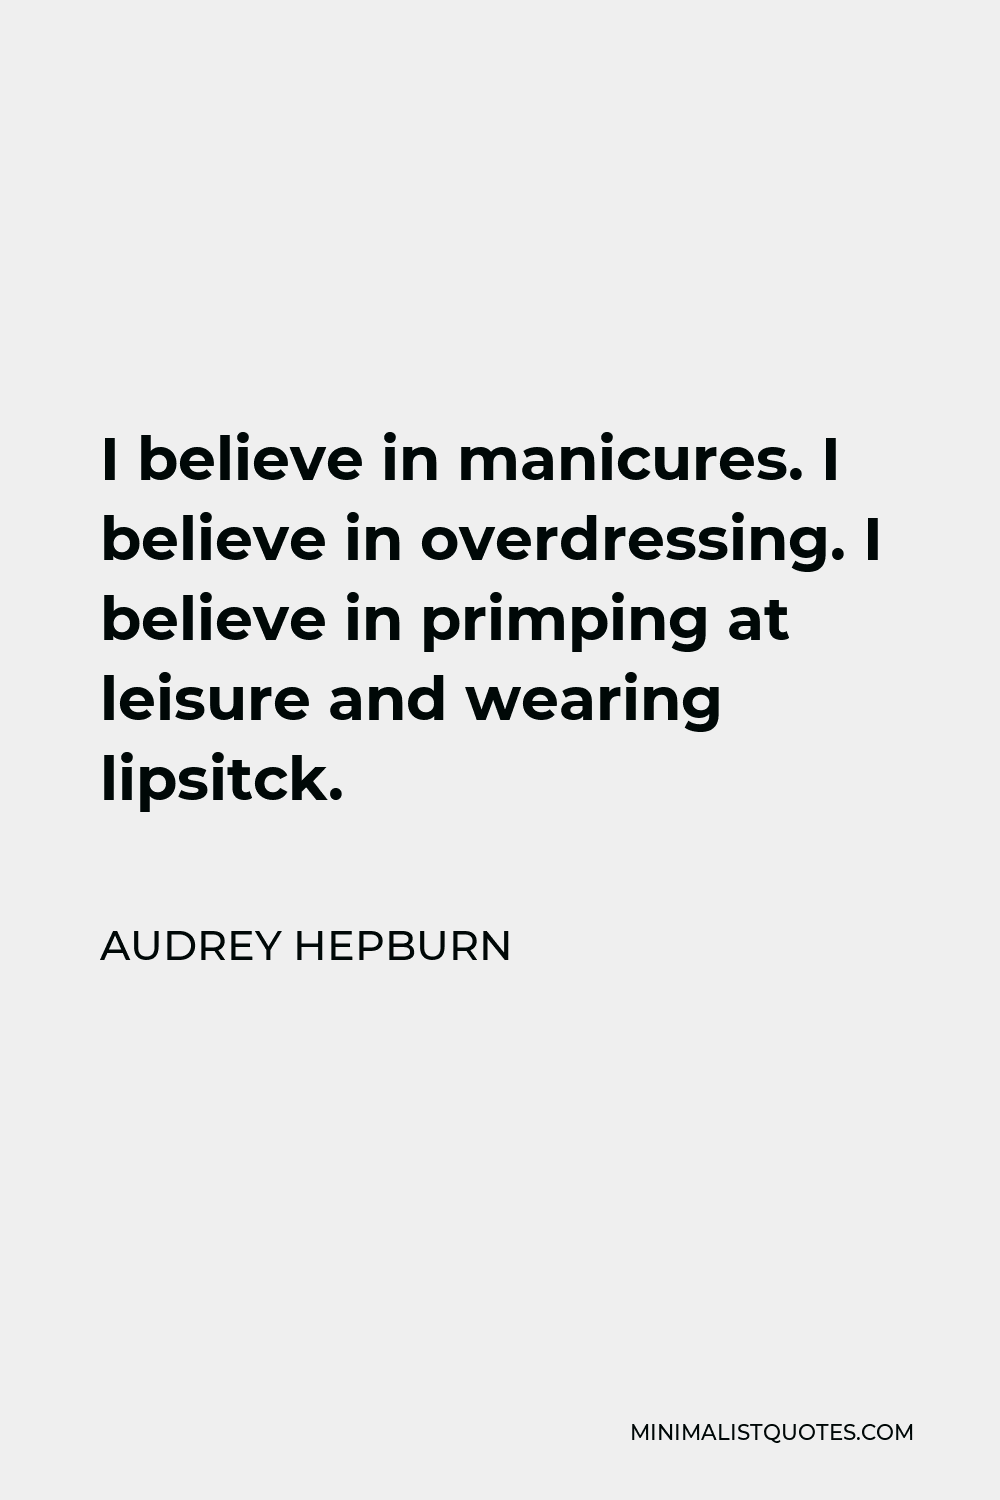 Audrey Hepburn Quote - I believe in manicures. I believe in overdressing. I believe in primping at leisure and wearing lipsitck.